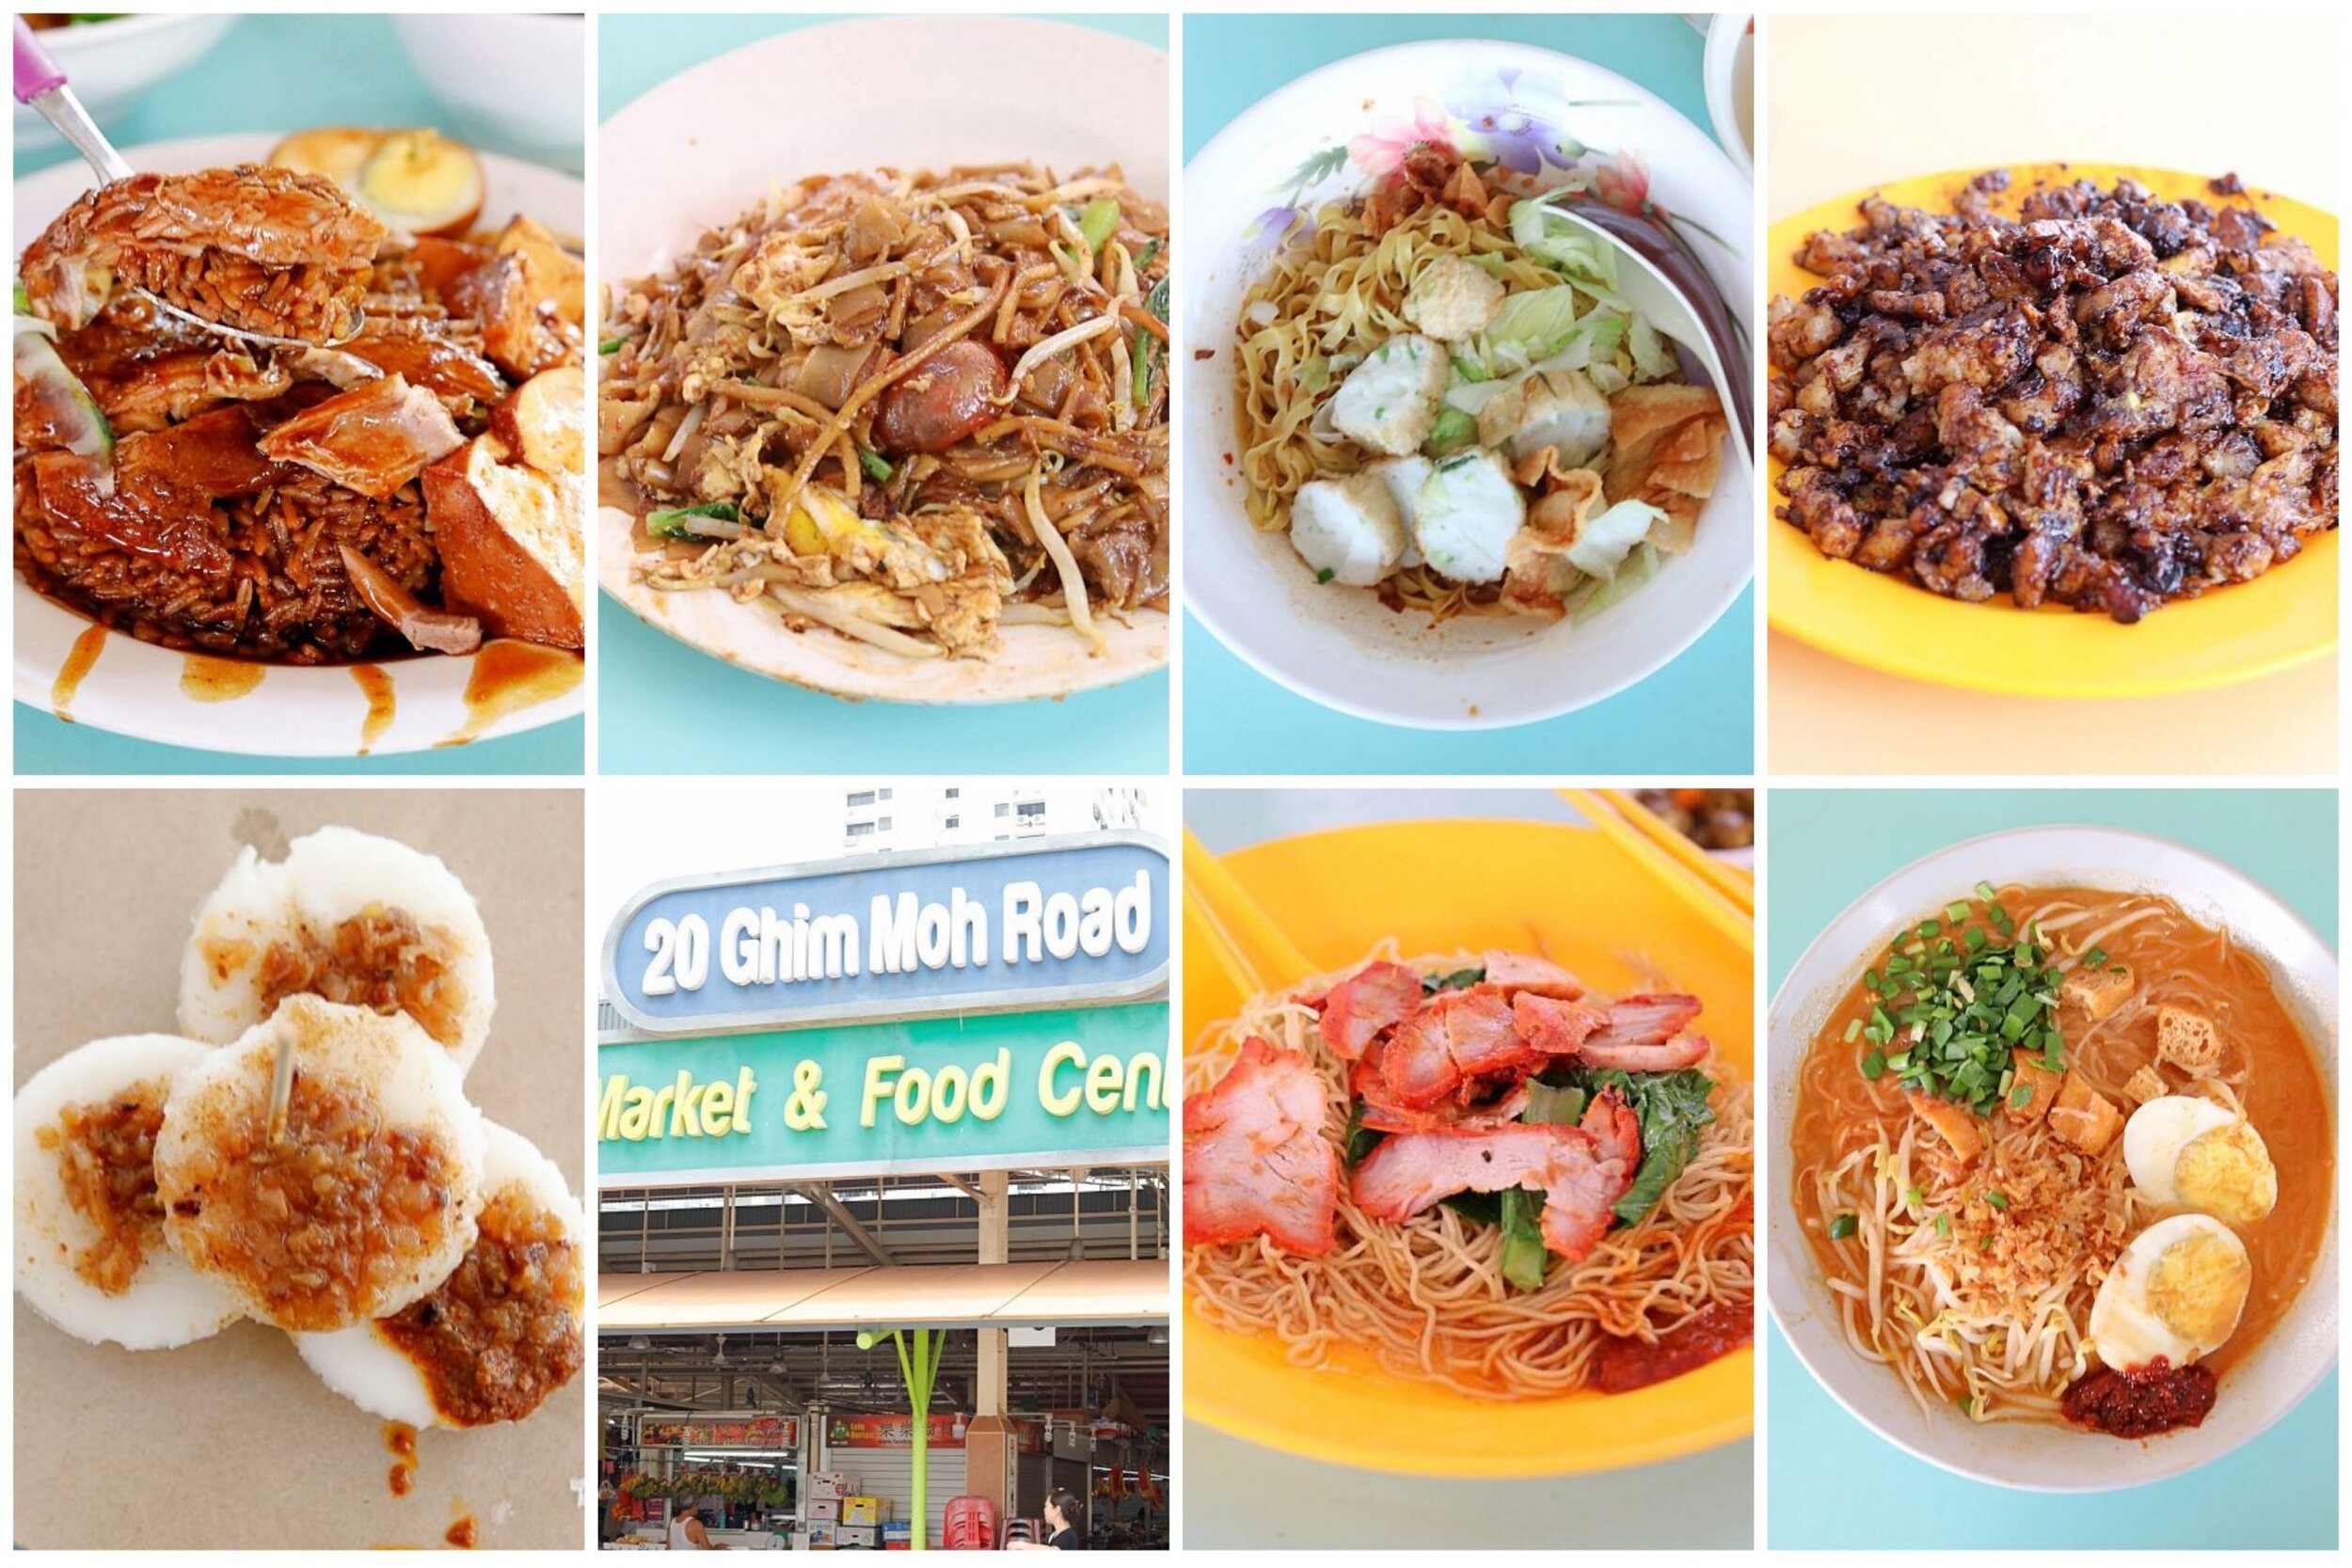 Ghim Moh Food Centre DanielFooddiary.jpg